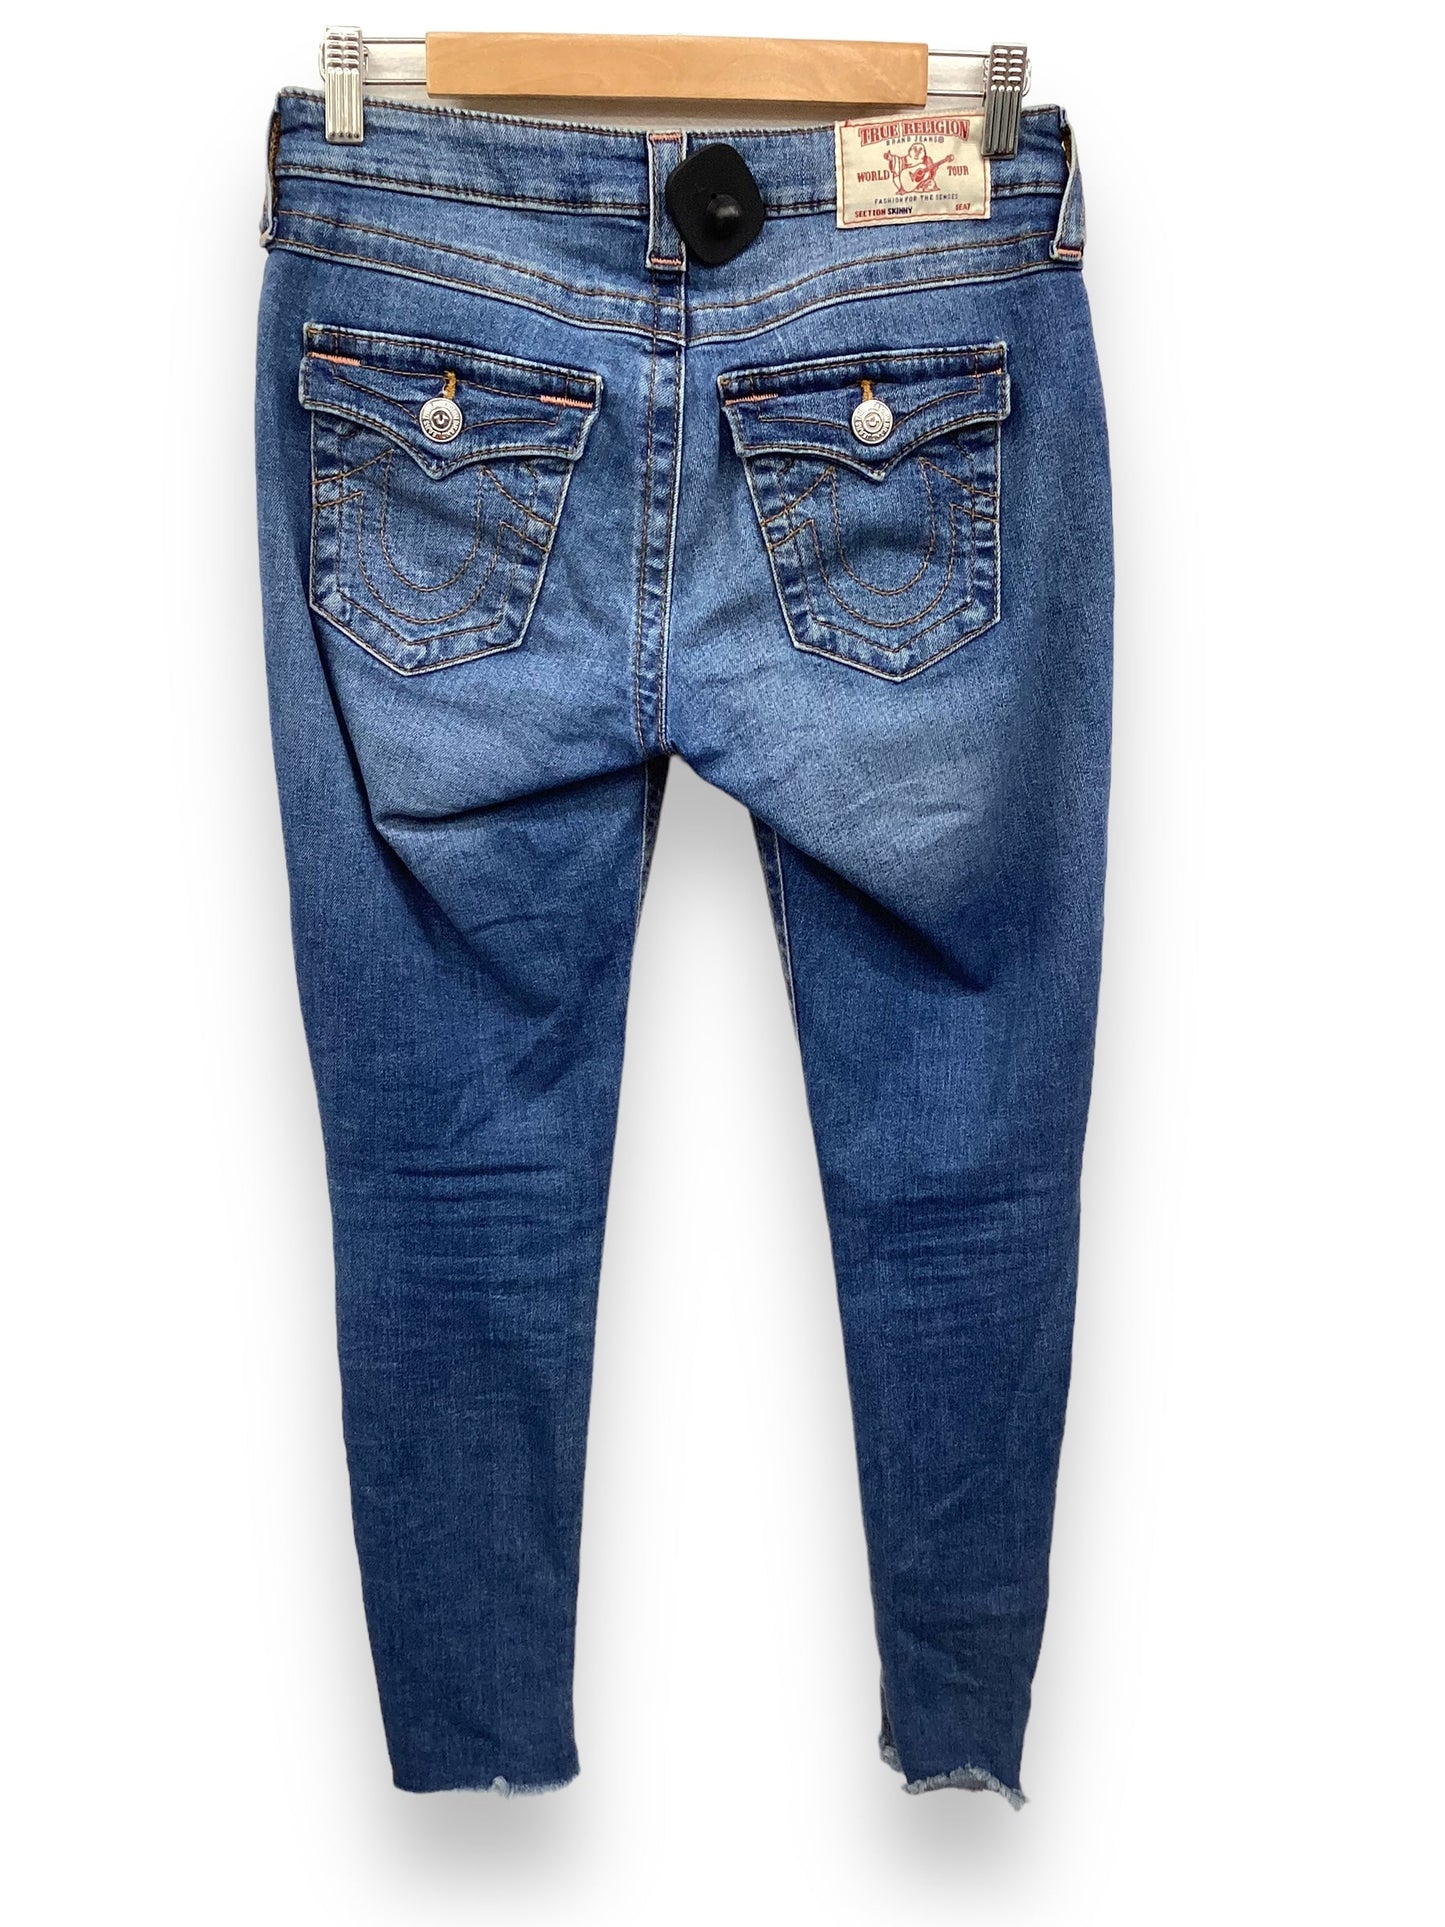 Blue Denim Jeans Designer True Religion, Size 4